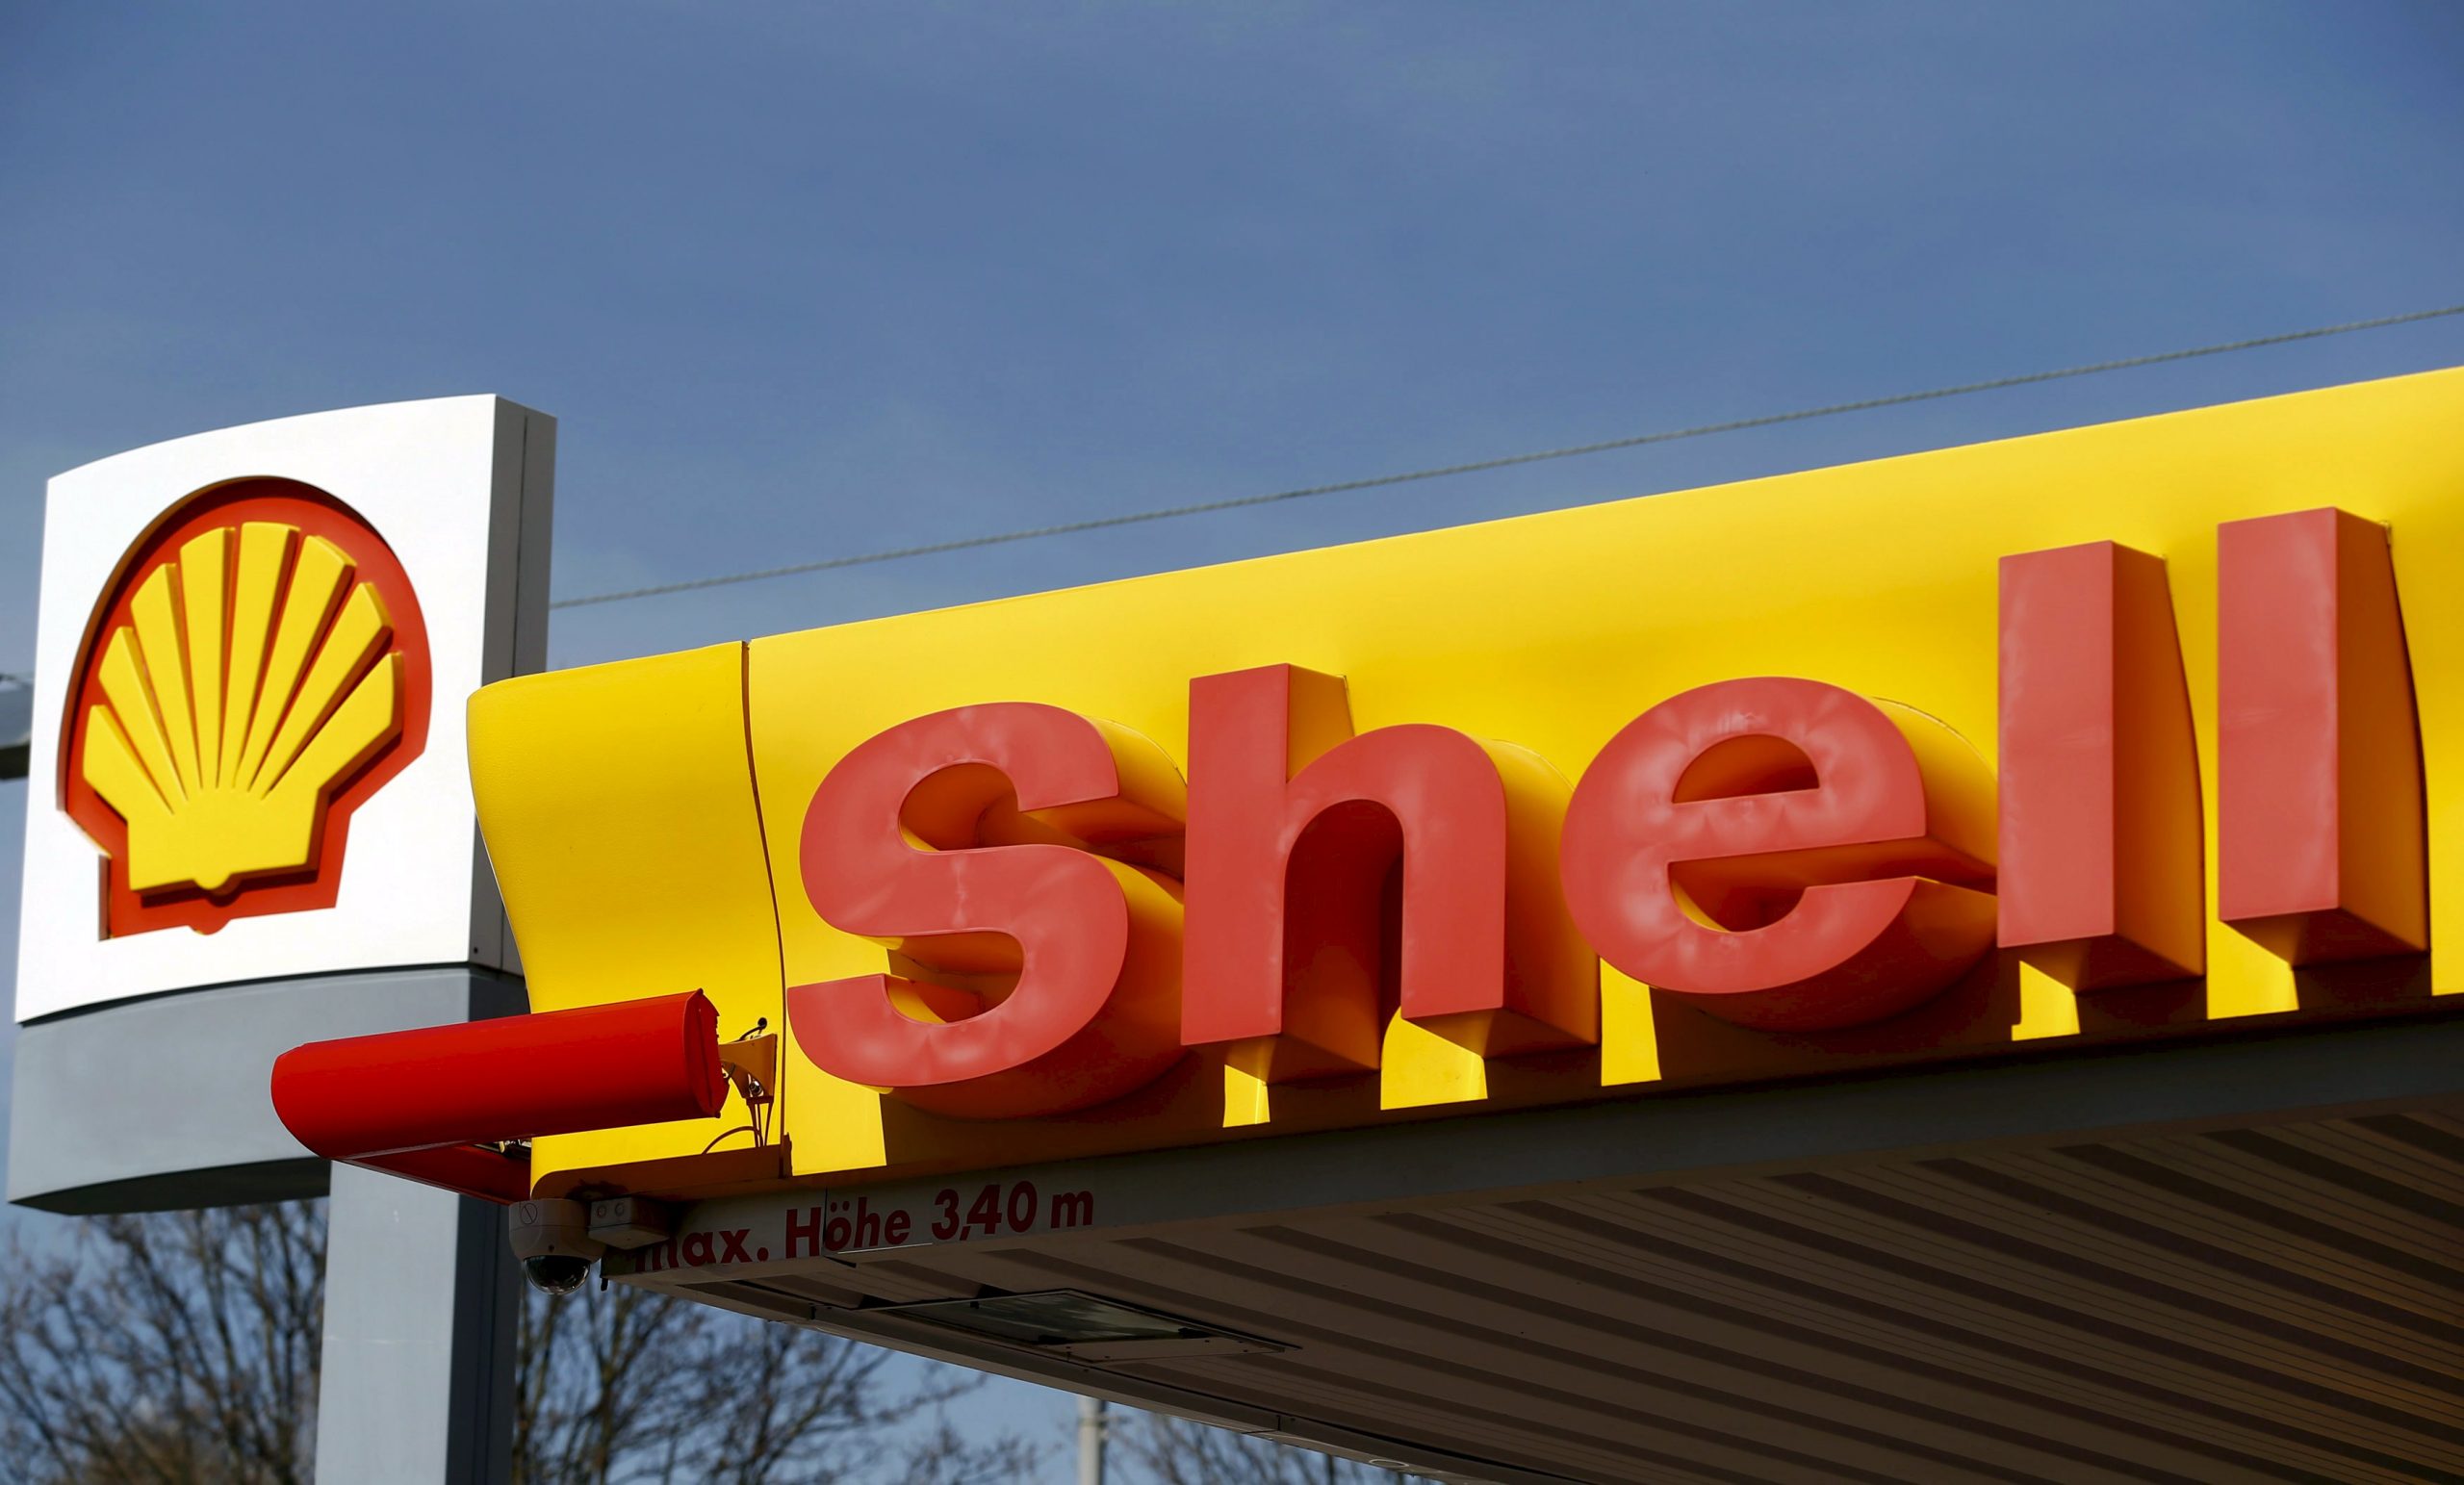 Shell – Θα παράγει αεροπορικό καύσιμο με χαμηλή περιεκτικότητα άνθρακα